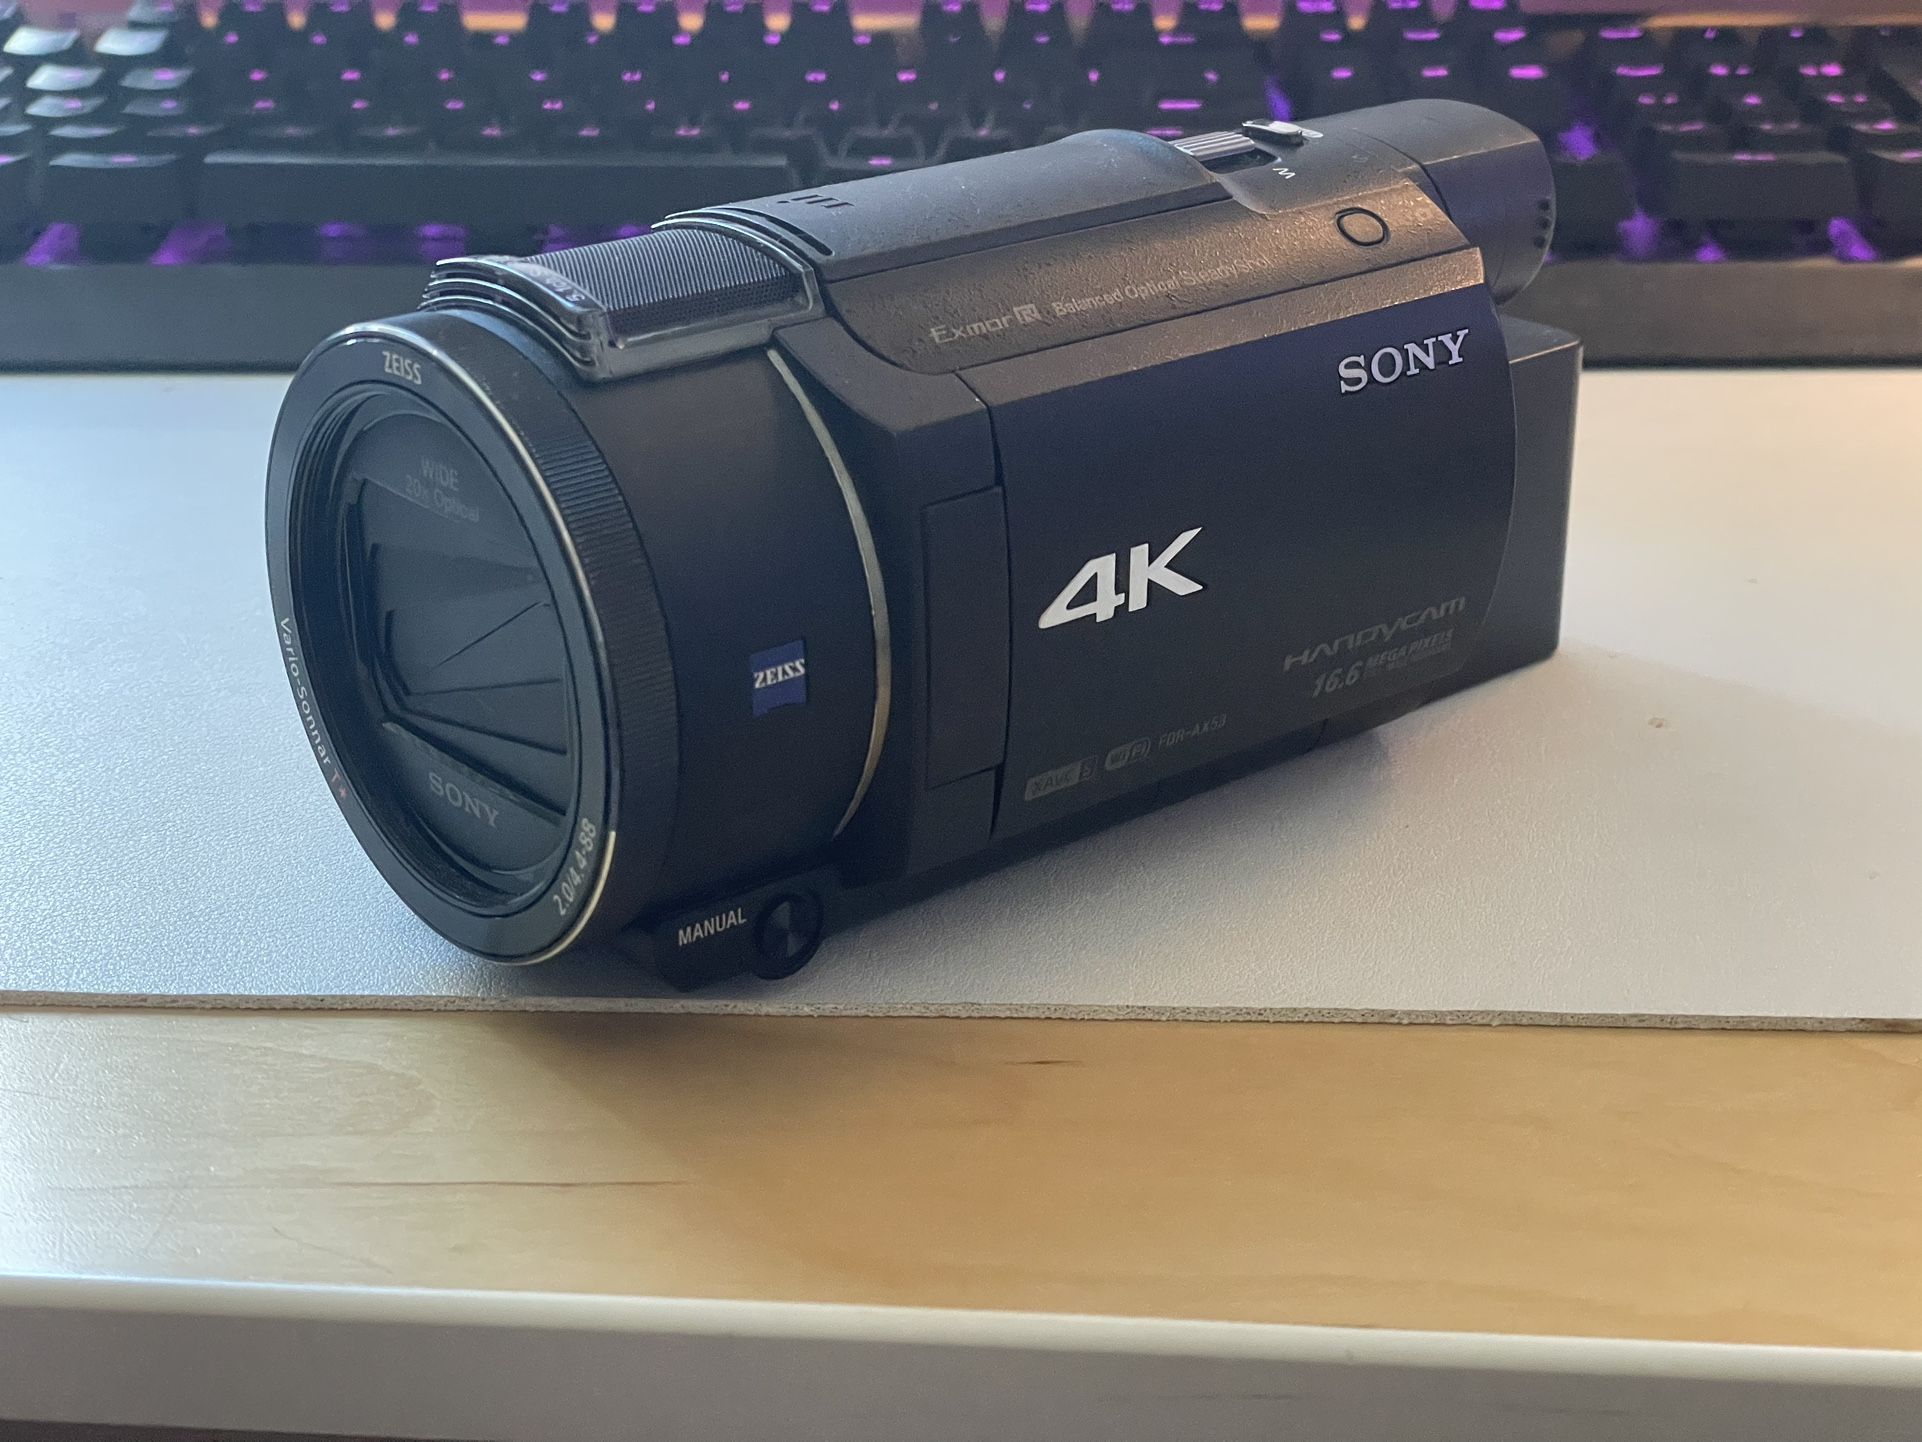 Sony AX53 4K Camcorder